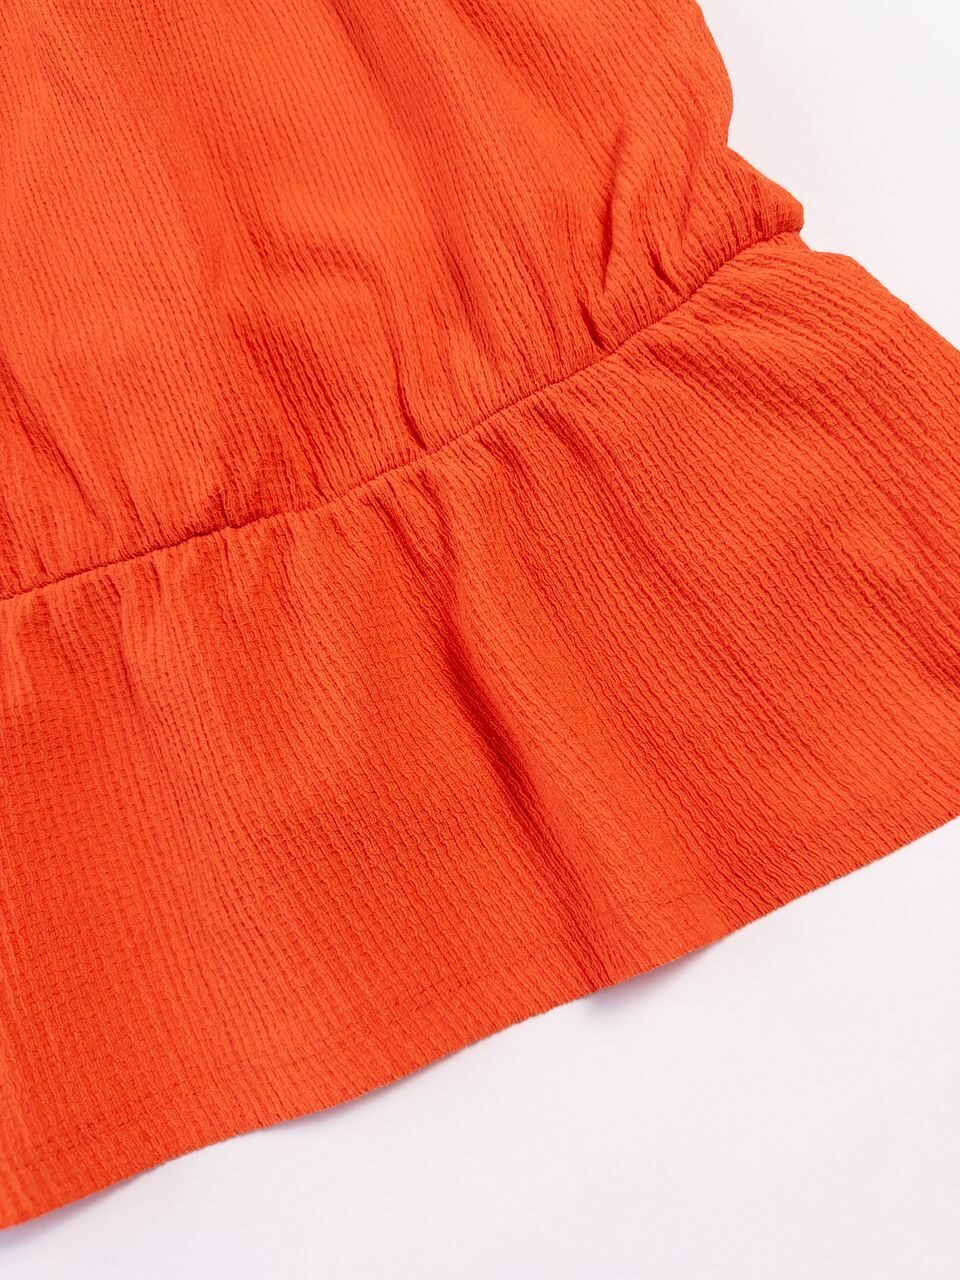 Топ трикотажный на талии резинка цвет оранжевый размер EUR L 42-44 (rus 48-50) KIABI